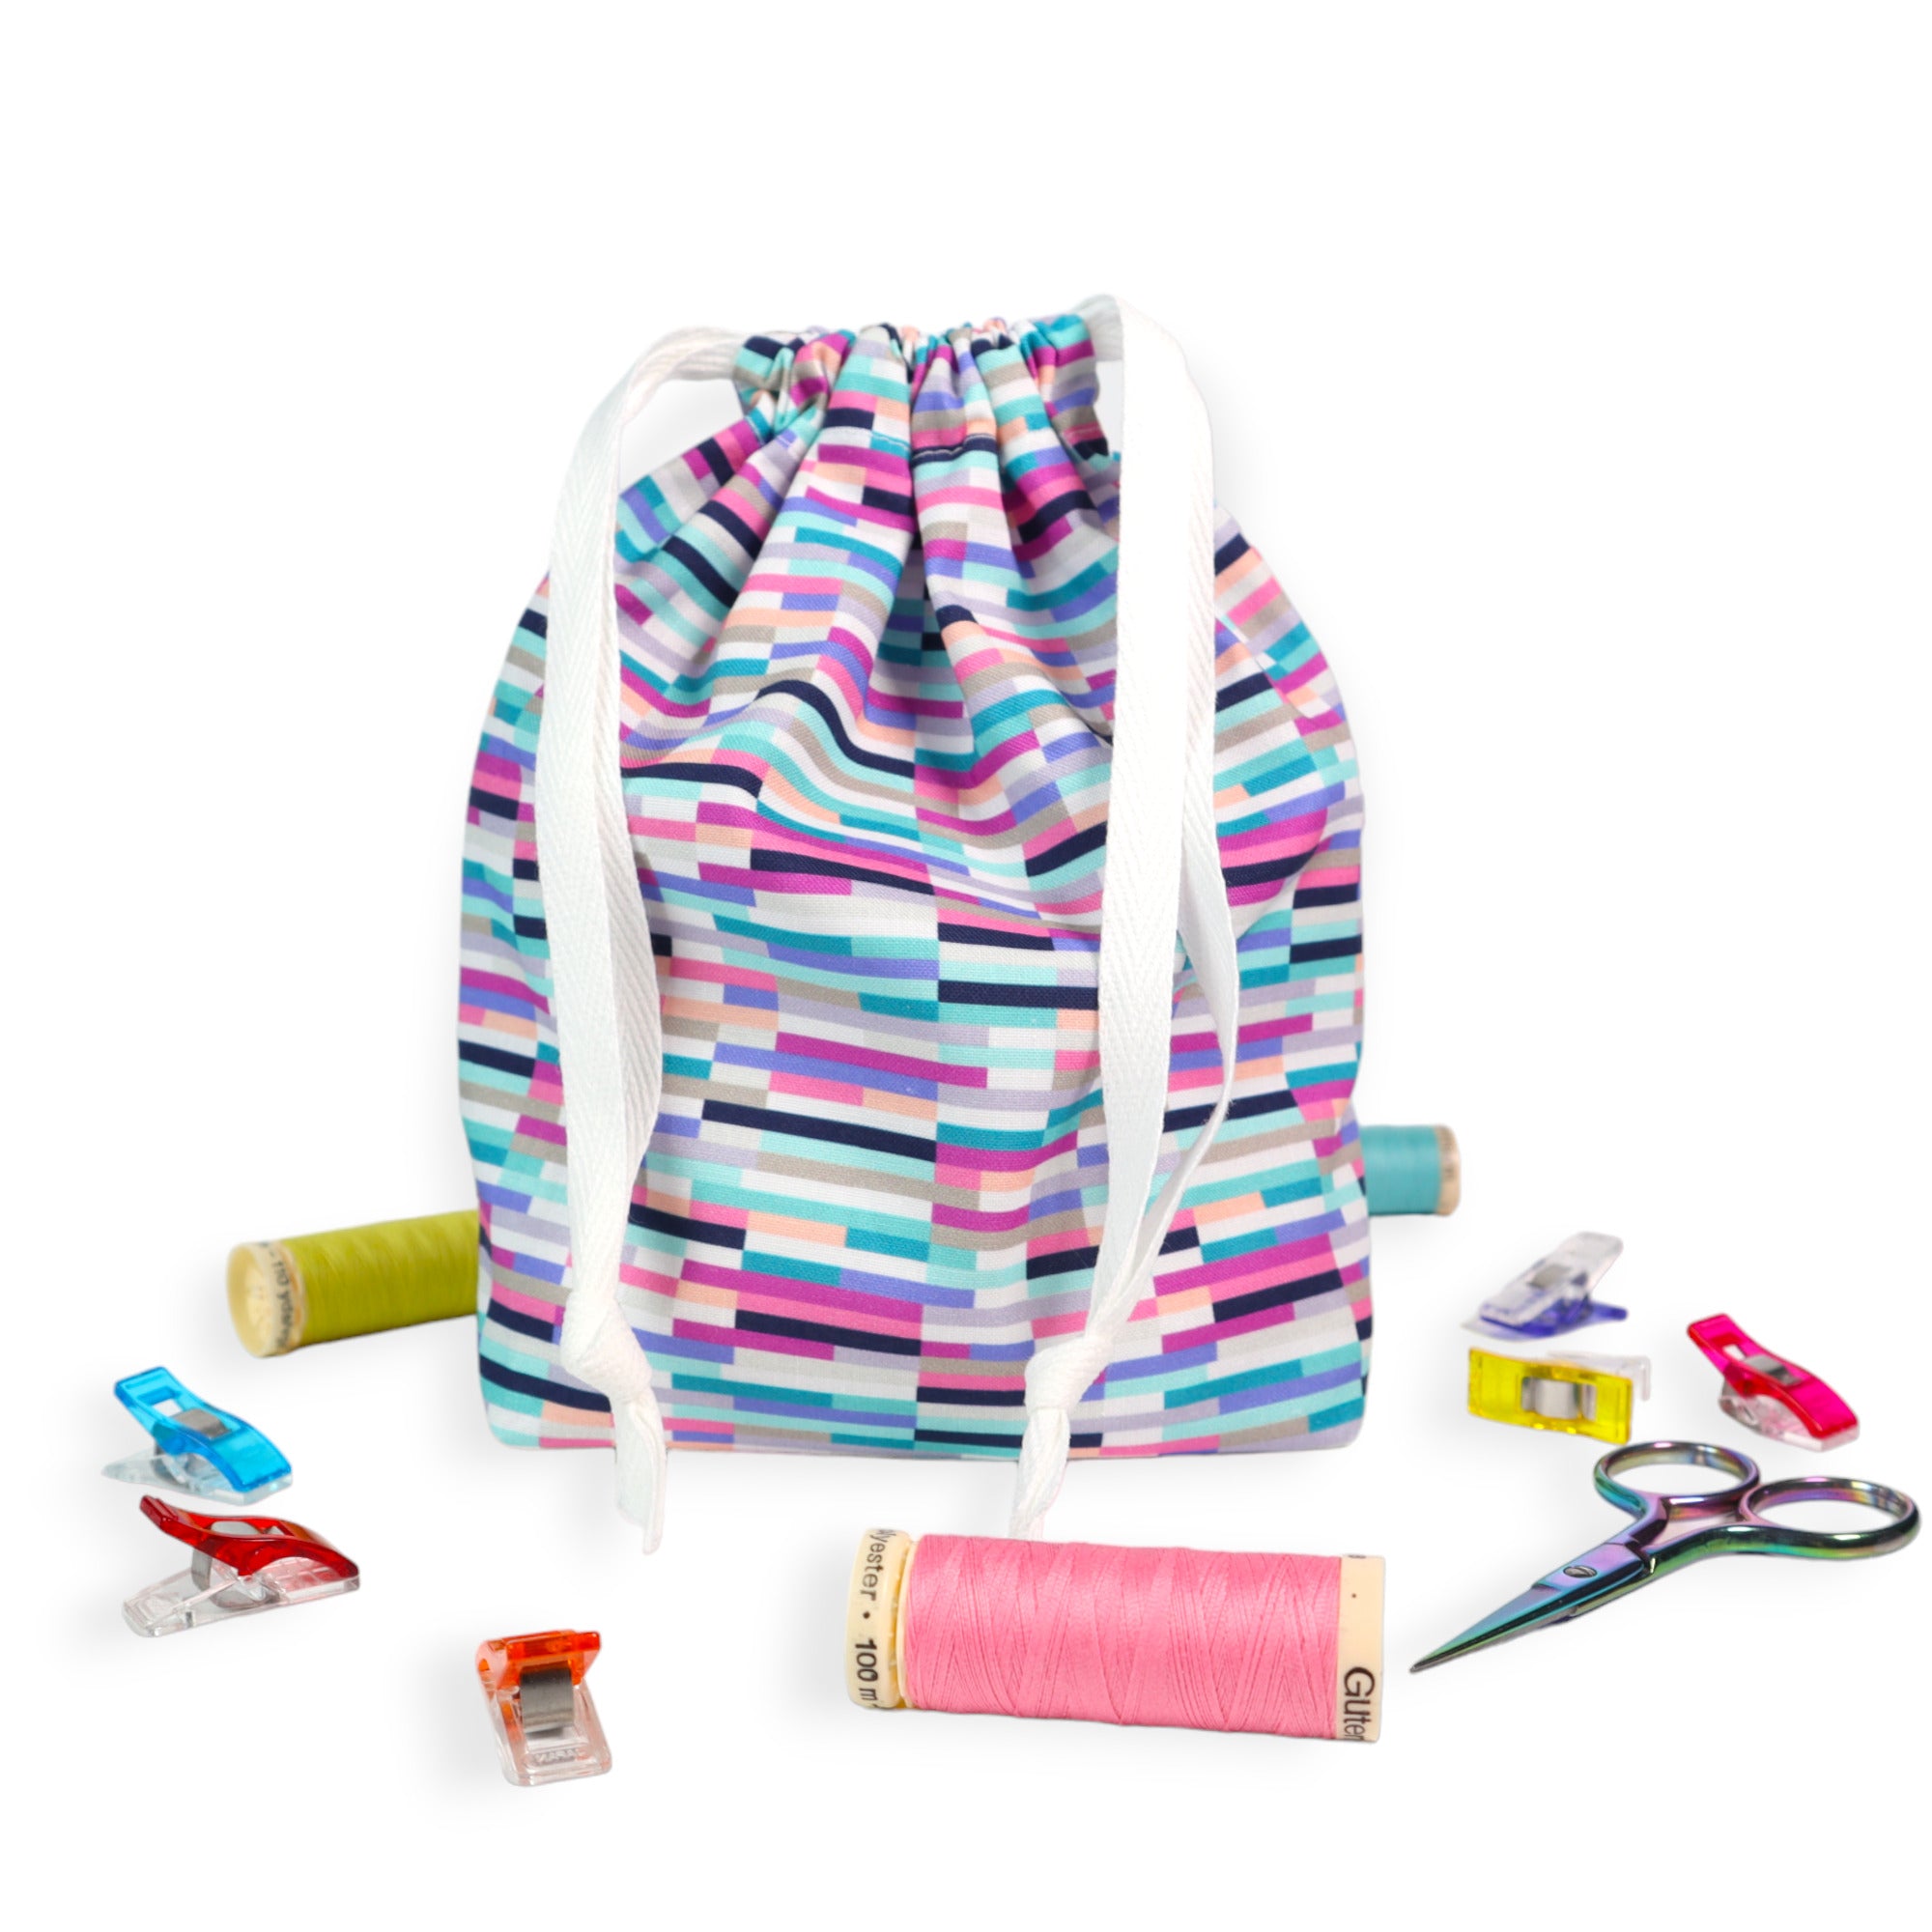 Drawstring Bag Sewing Kit - Block Stripes- Makes 2 Bags